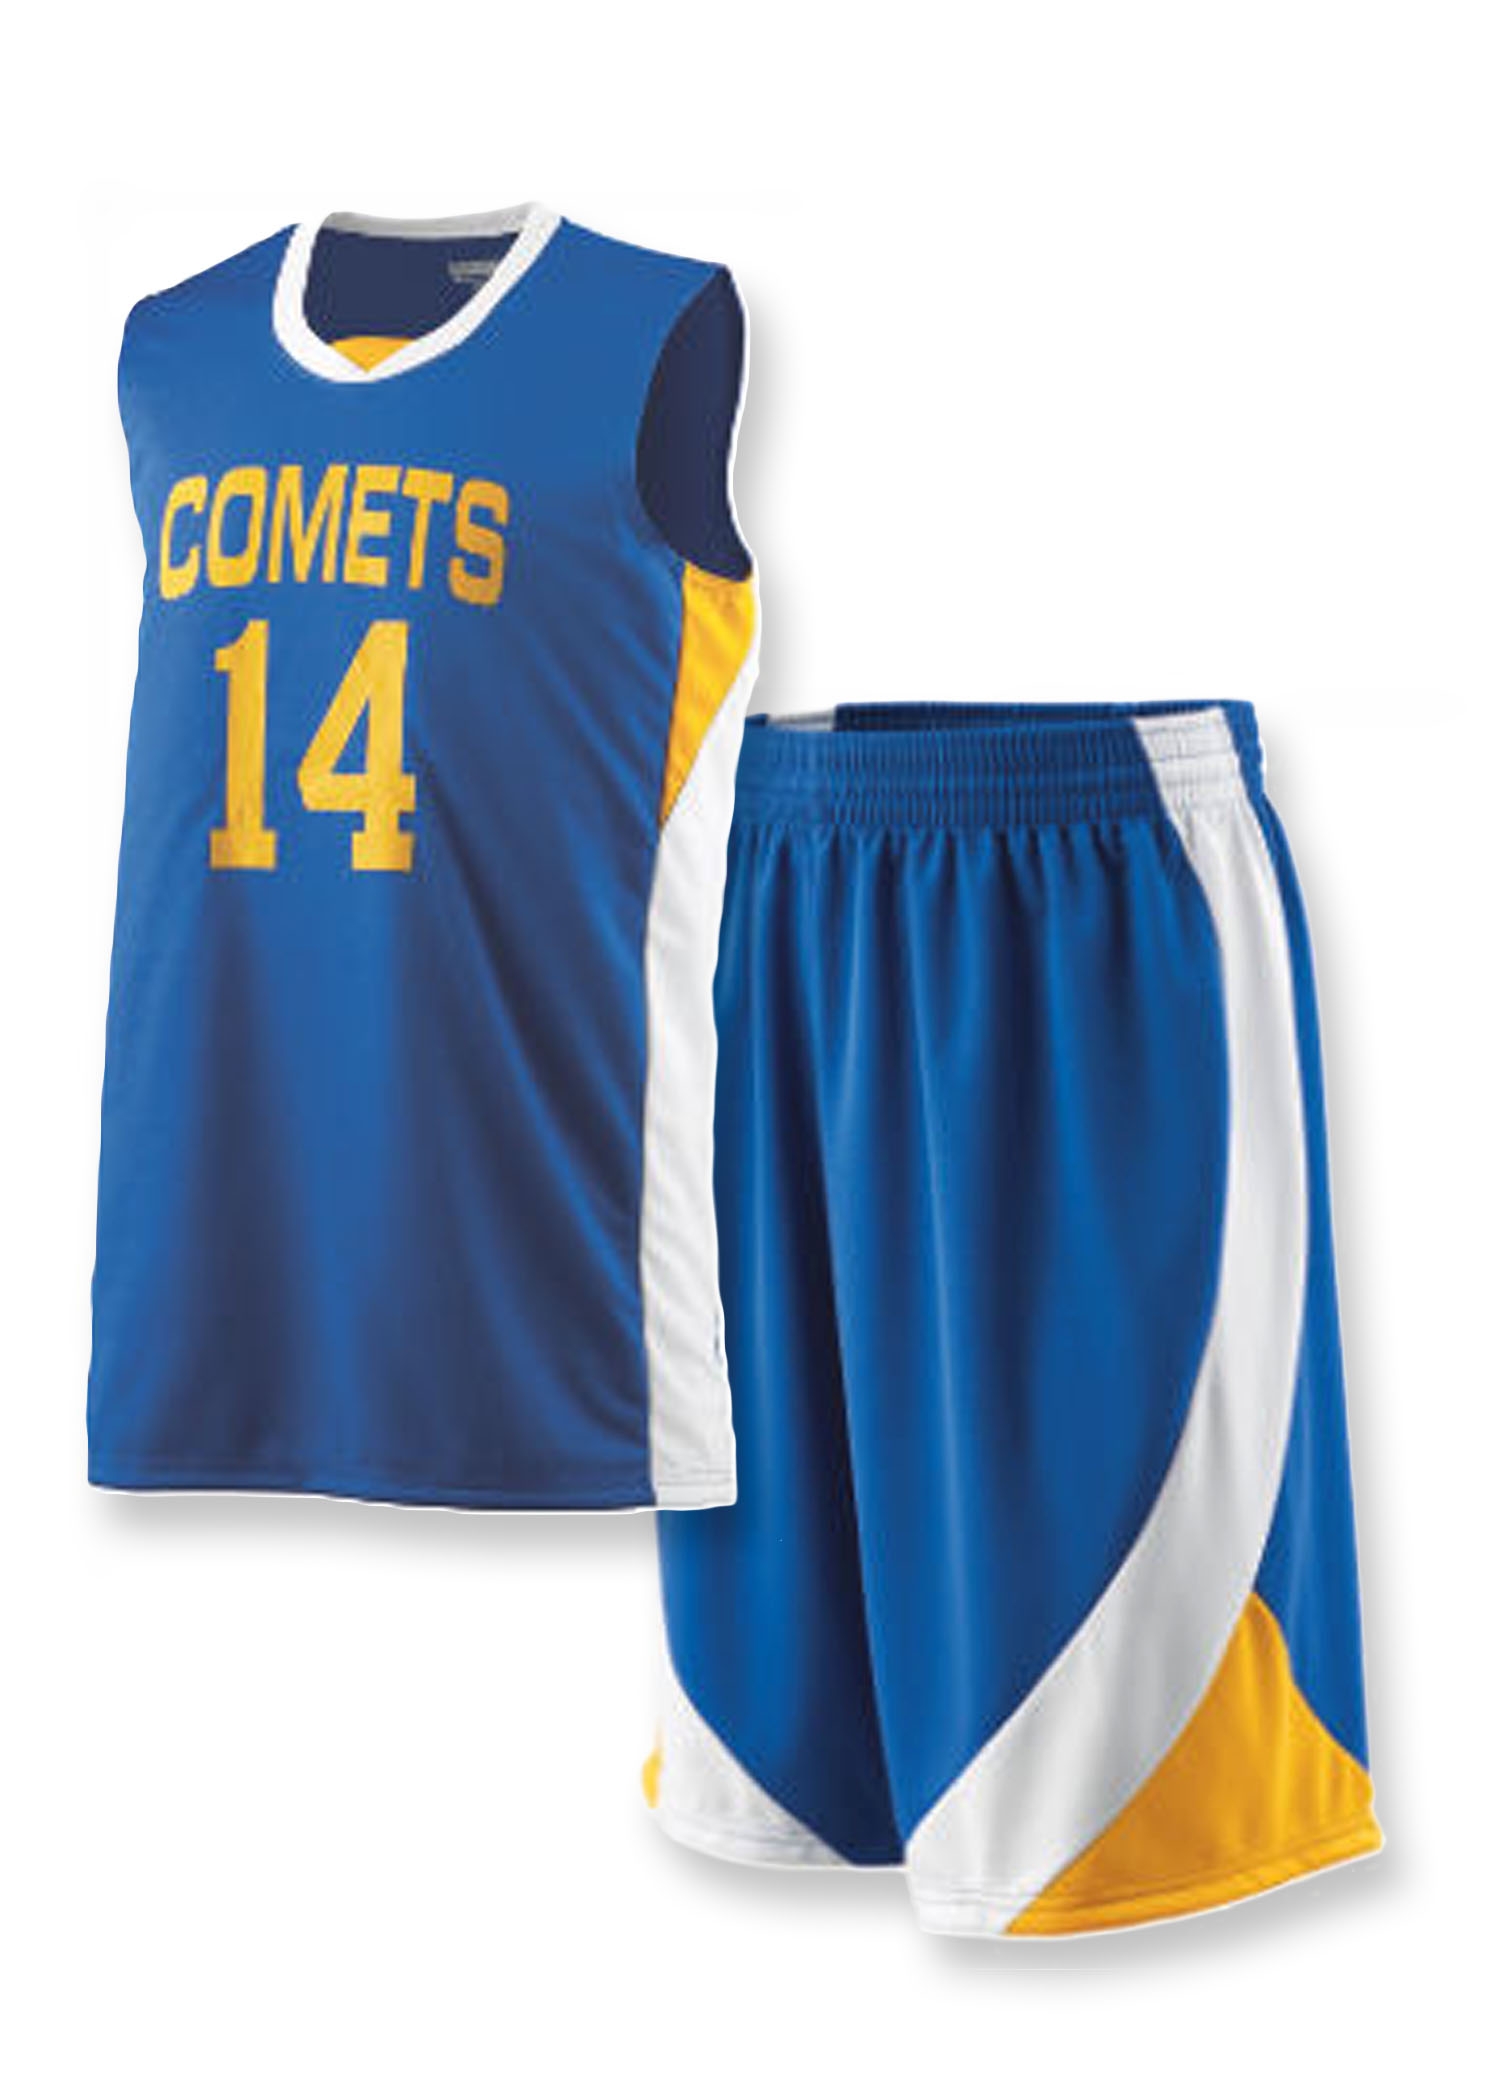 Augusta Sportswear Youth Basketball Uniform PKG